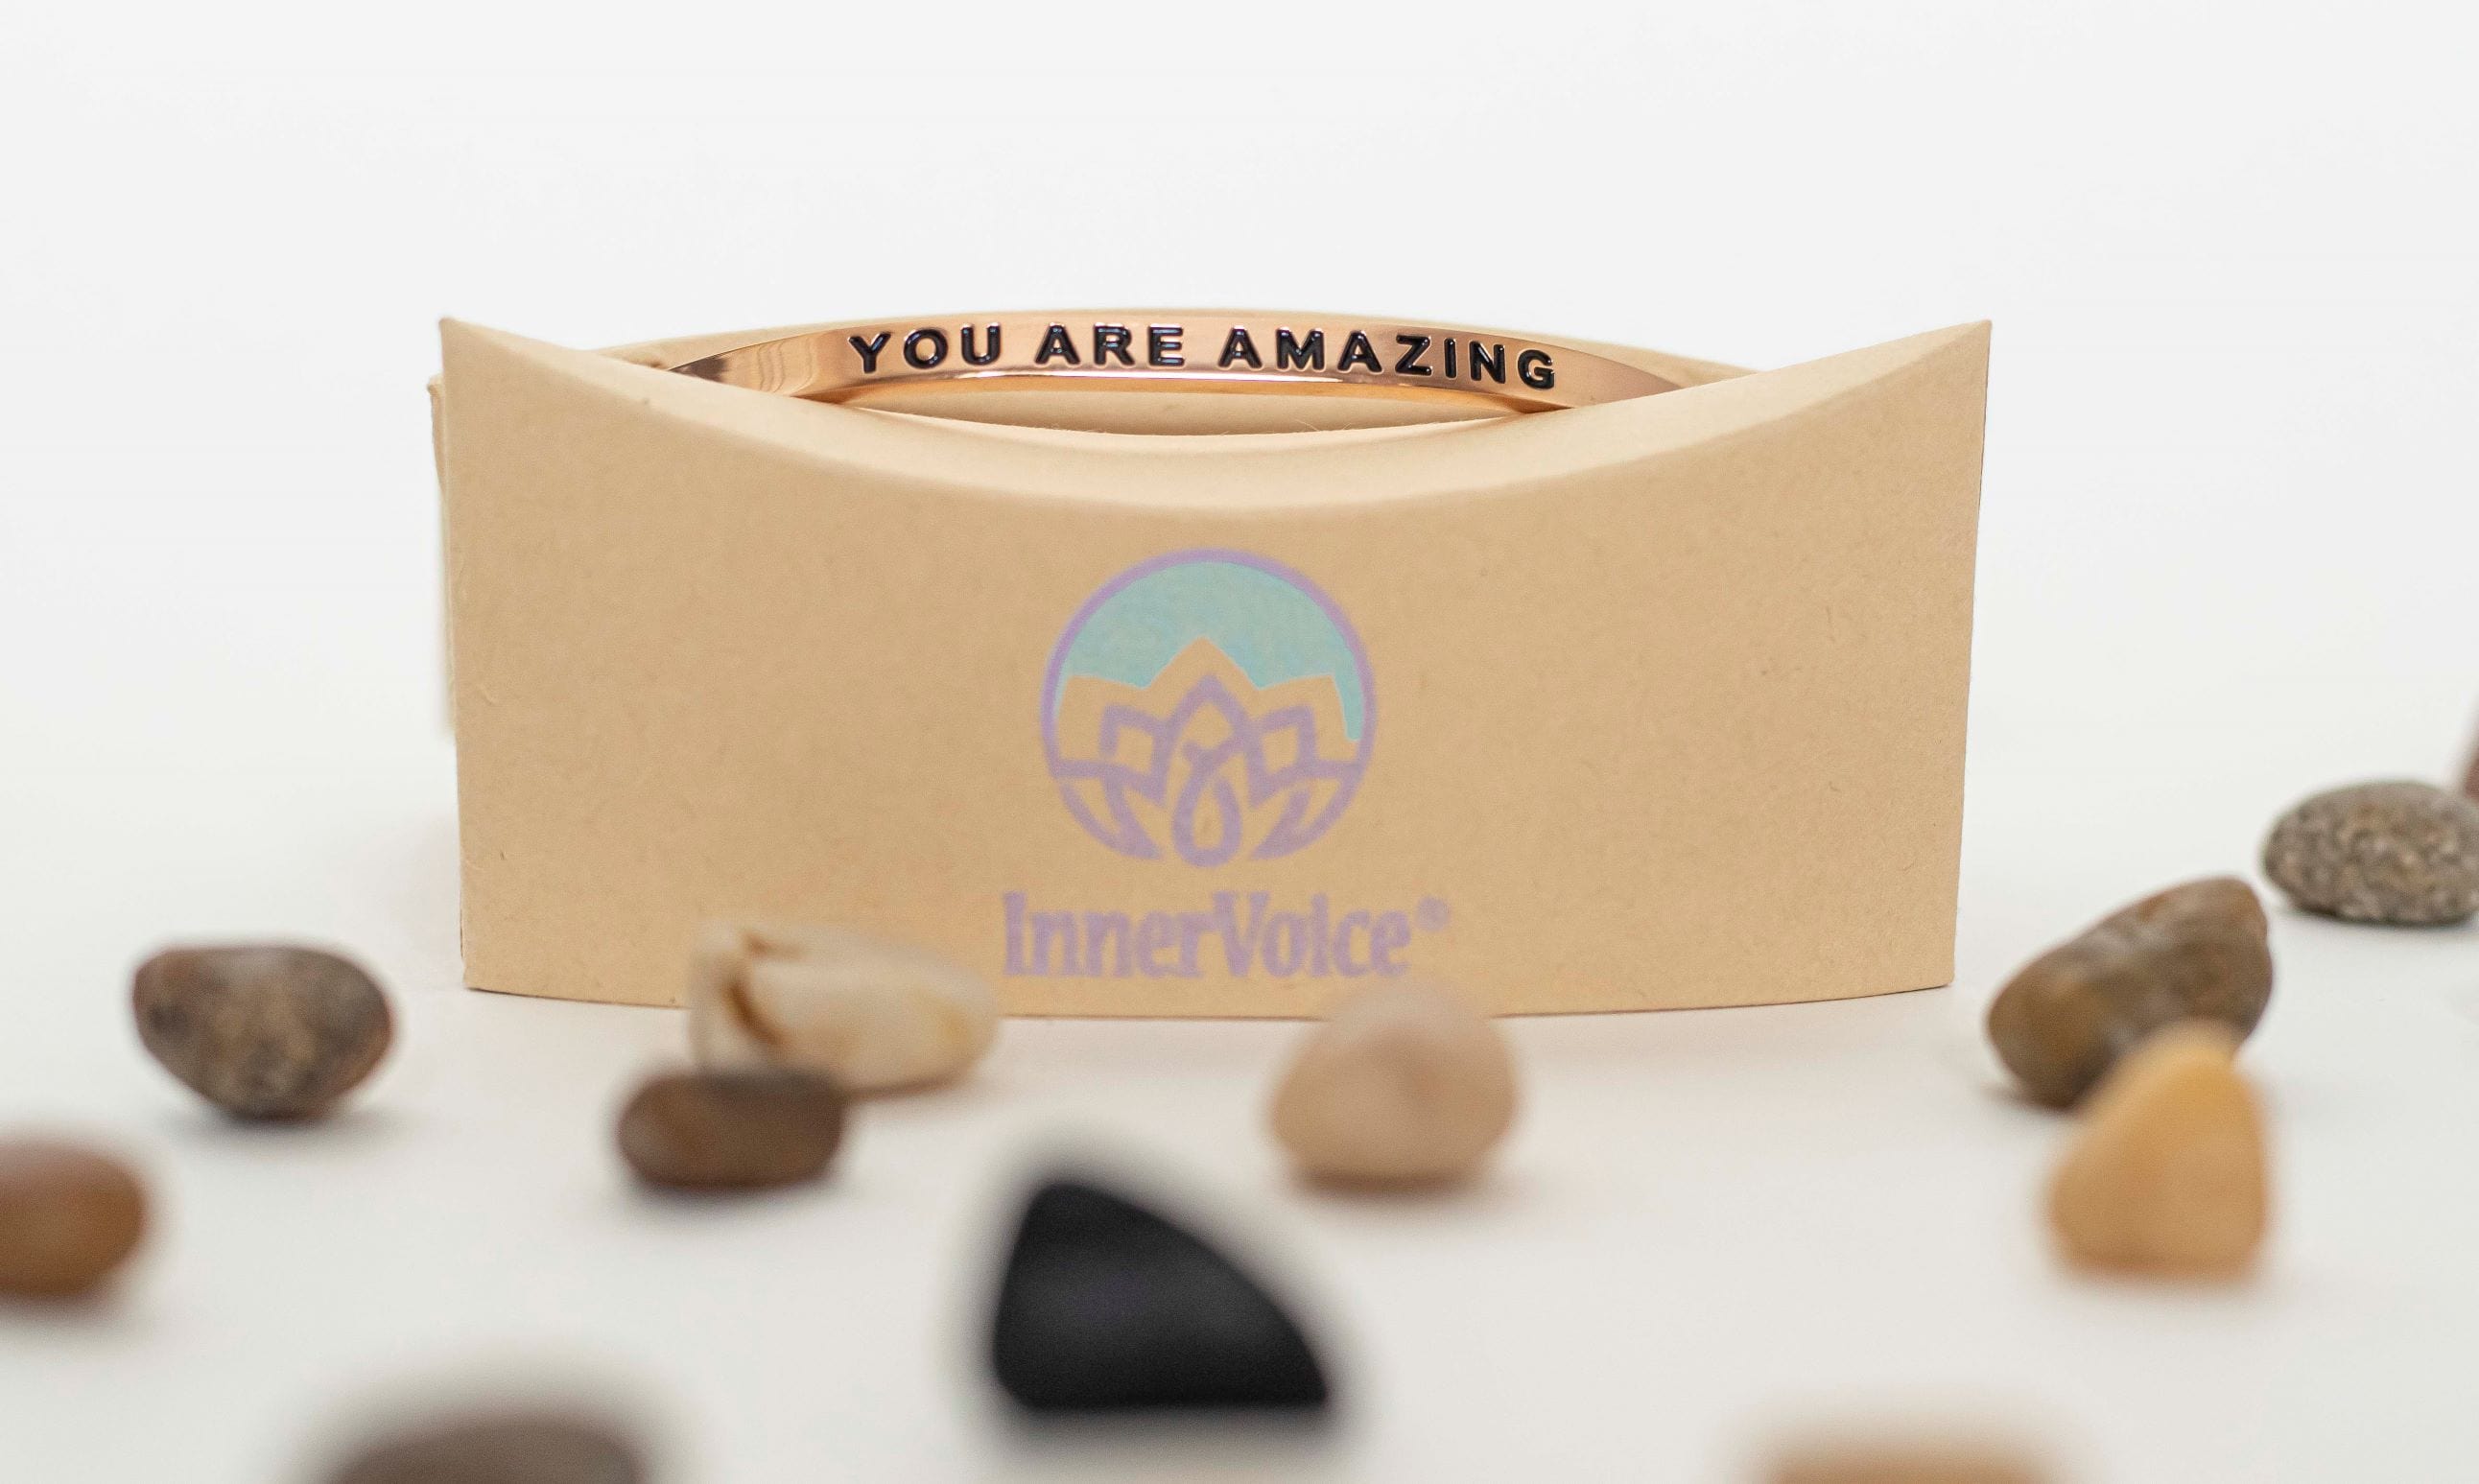 Motivated by Wine: InnerVoice Bracelet